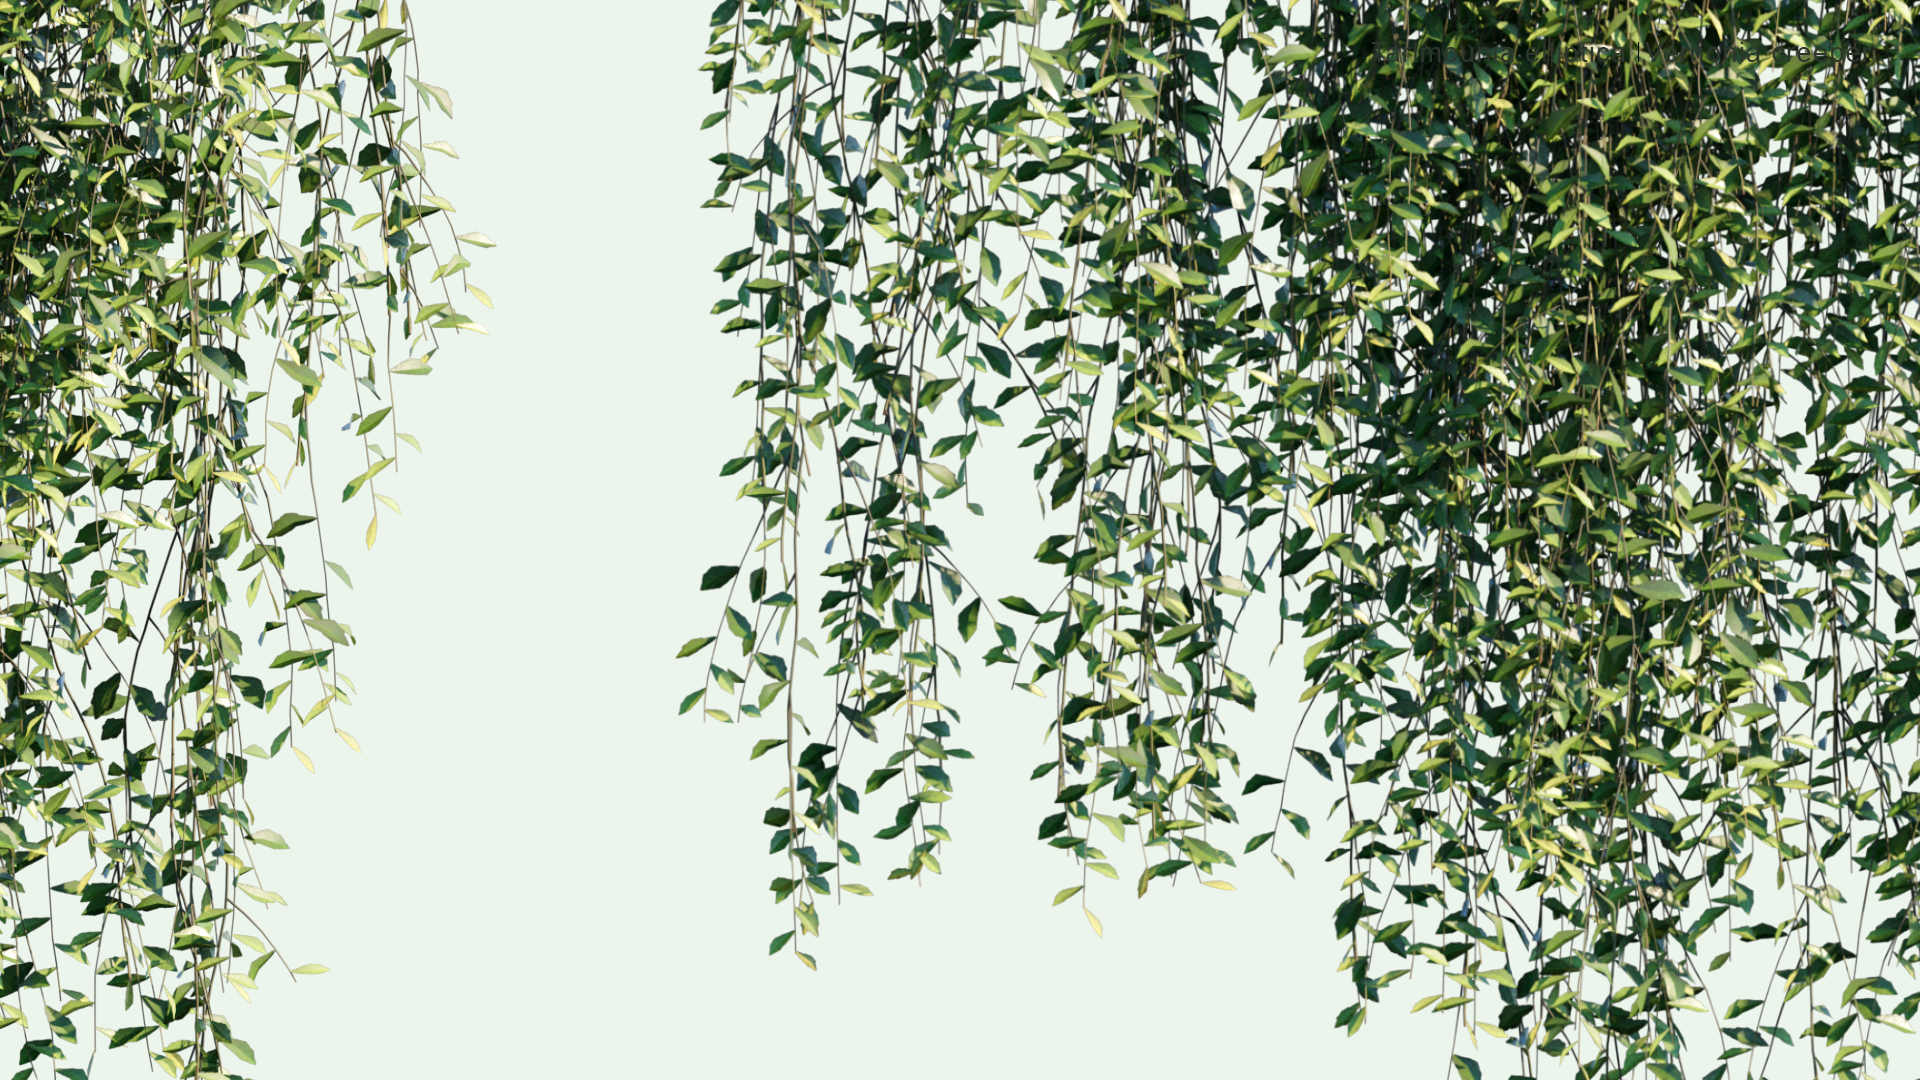 2D Tarlmounia Elliptica - Vernonia Creeper, Curtain Creeper, Parda Bel